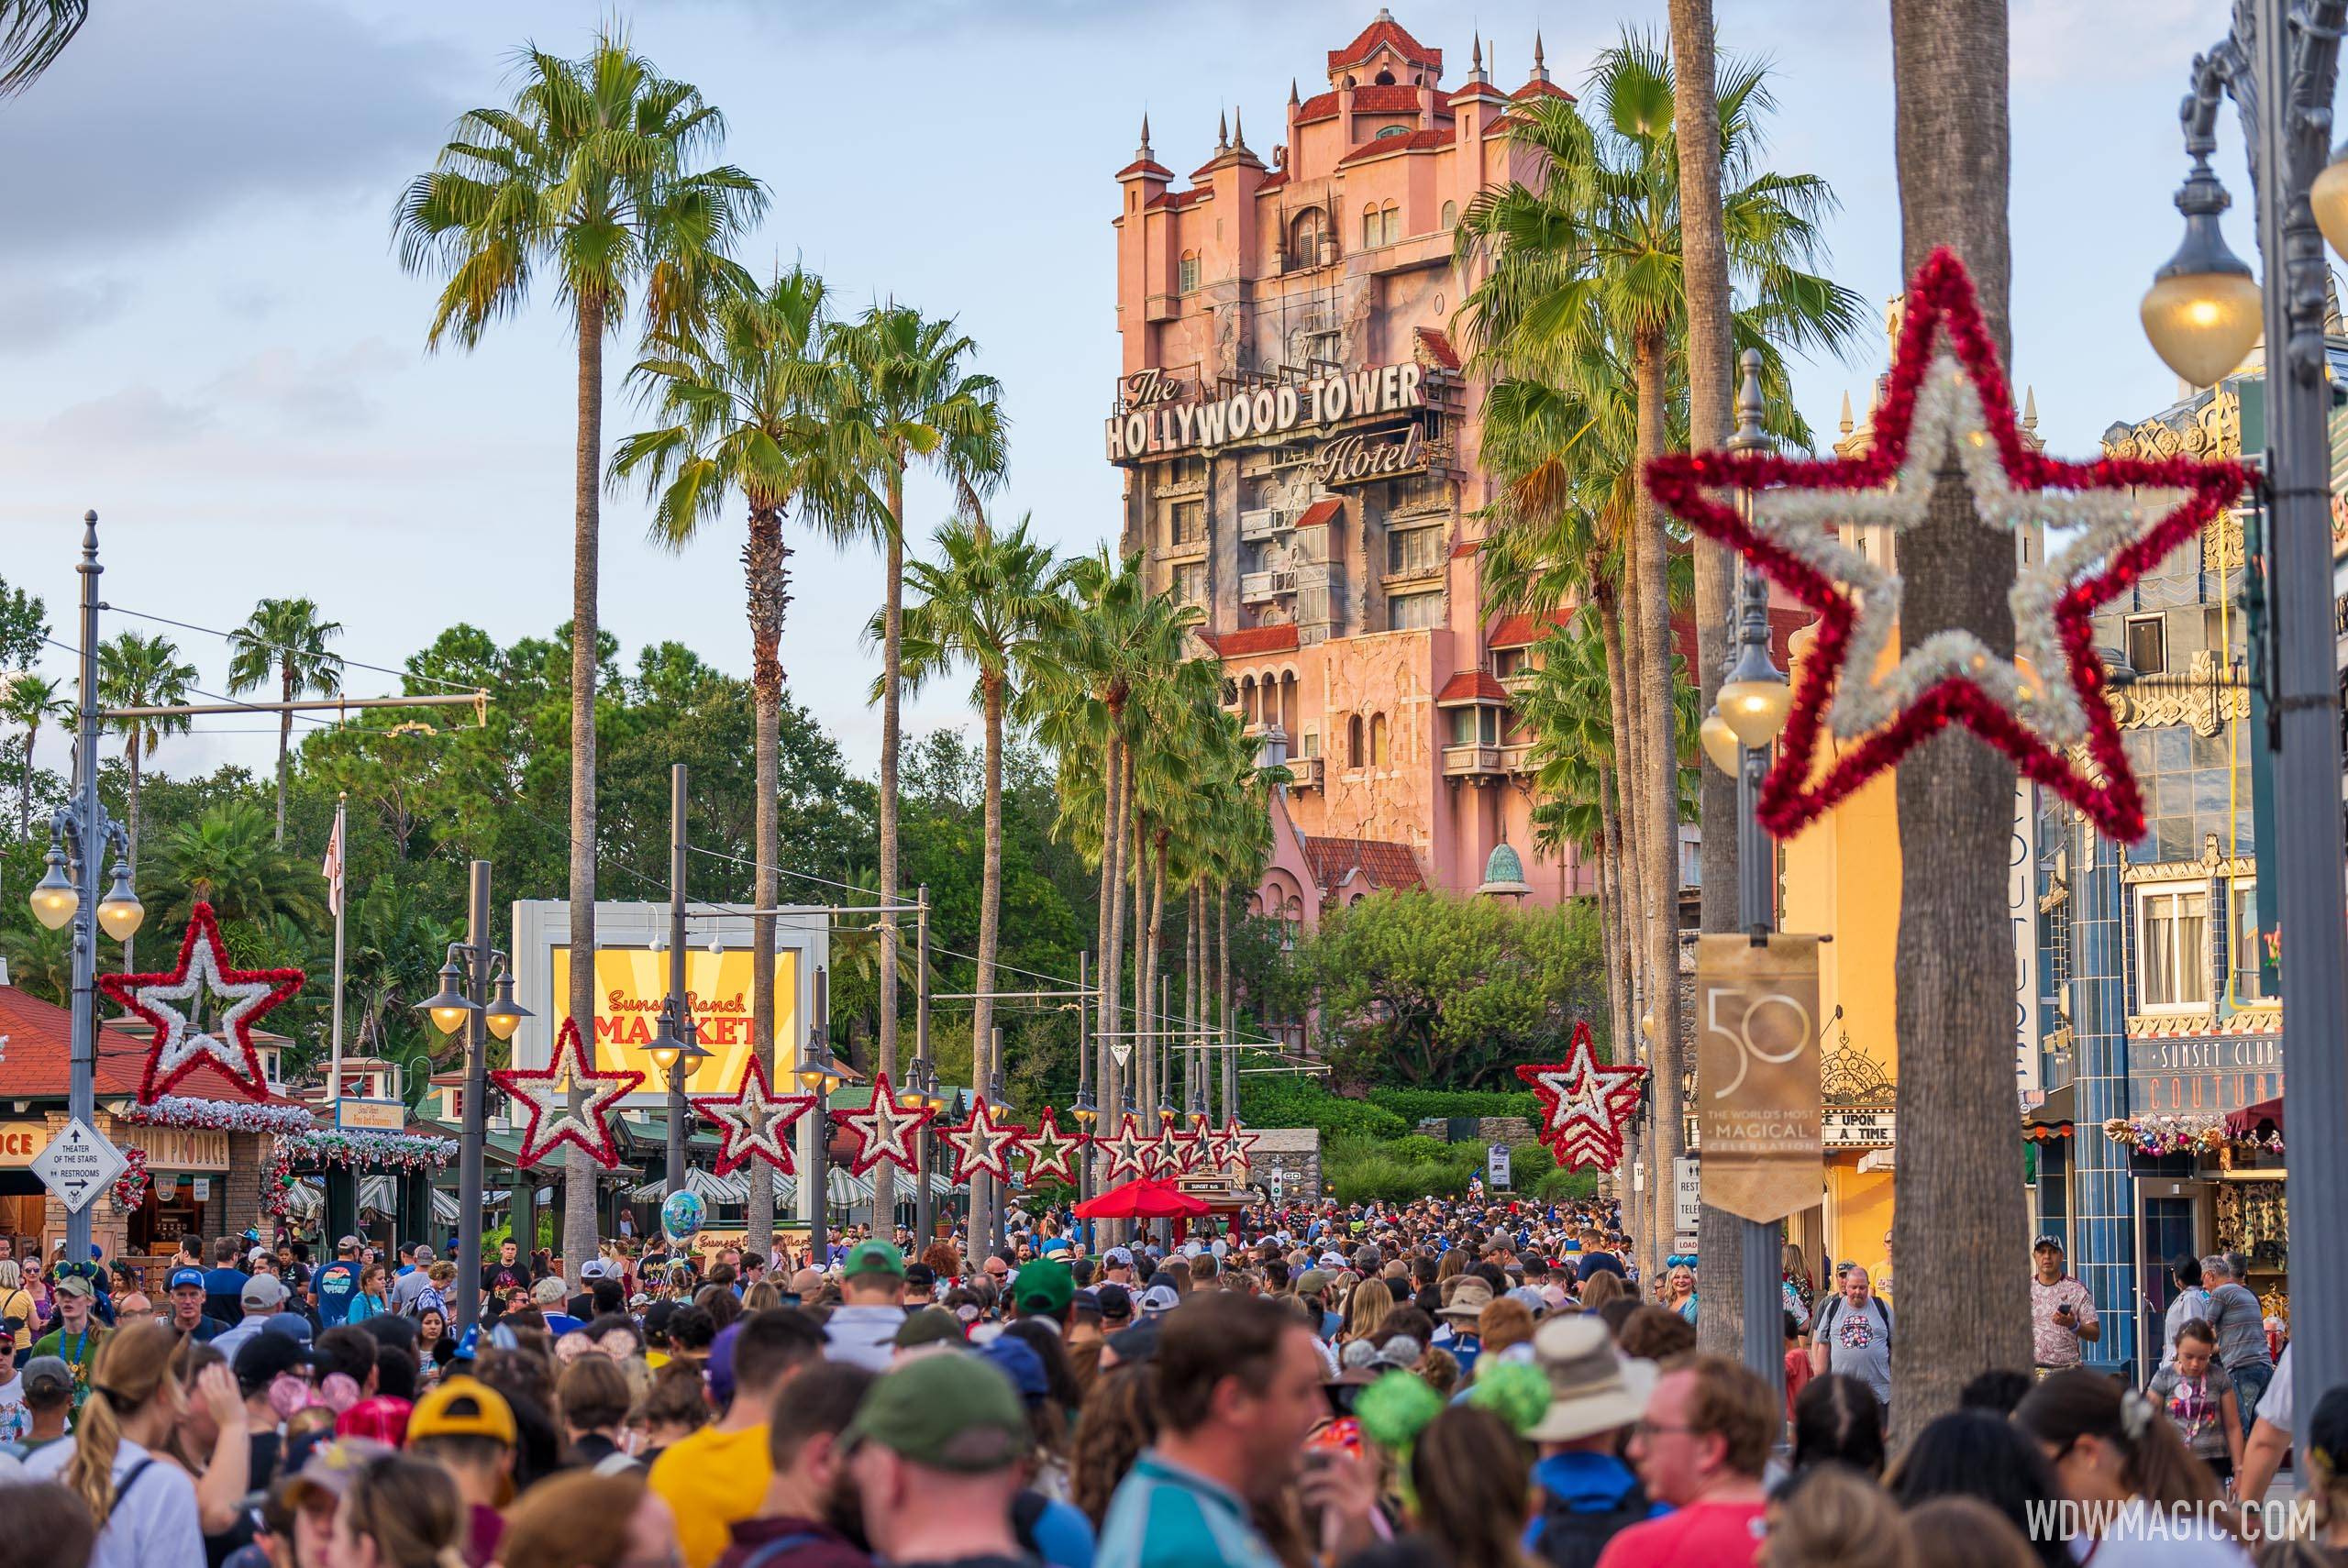 Huge crowds greet the return of Fantasmic! at Walt Disney World